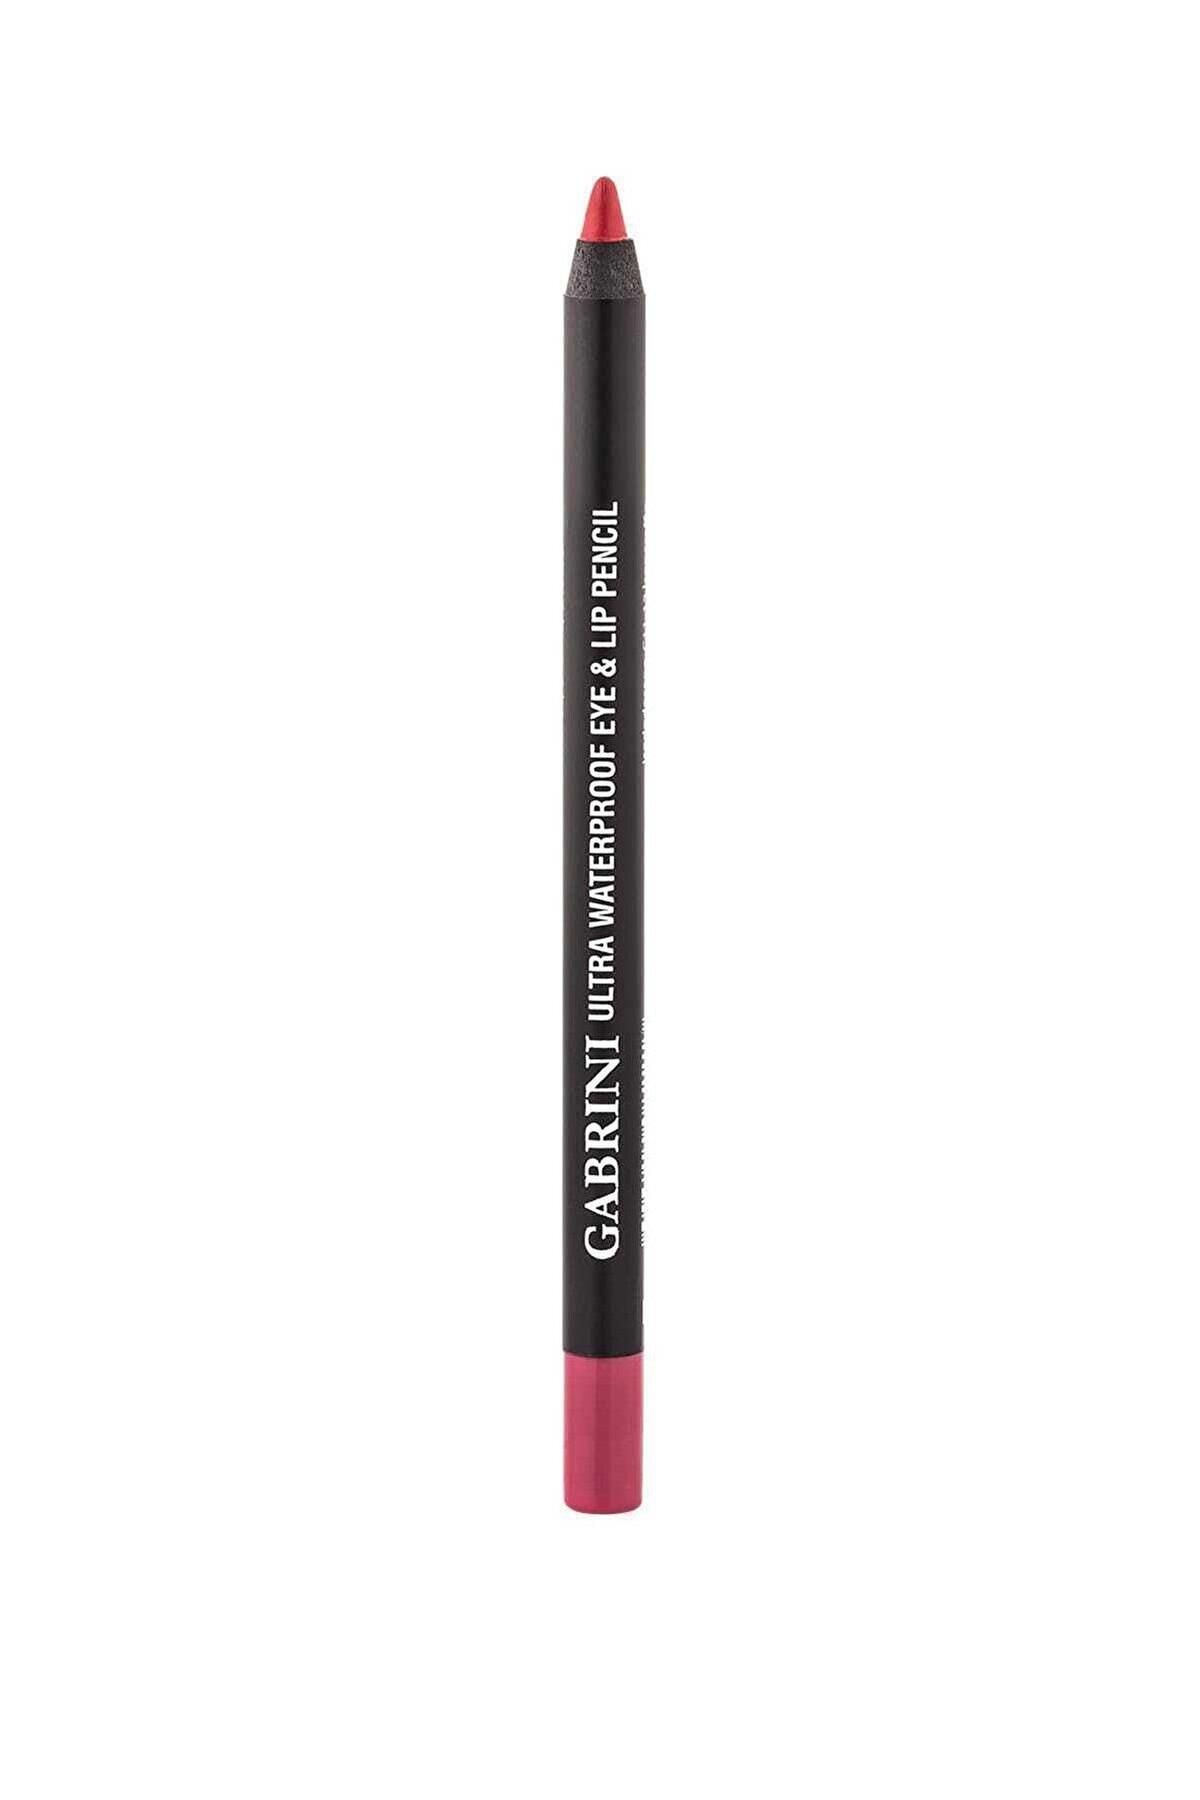 Gabrini Ultra Waterproof Eye & Lip Pencil 21